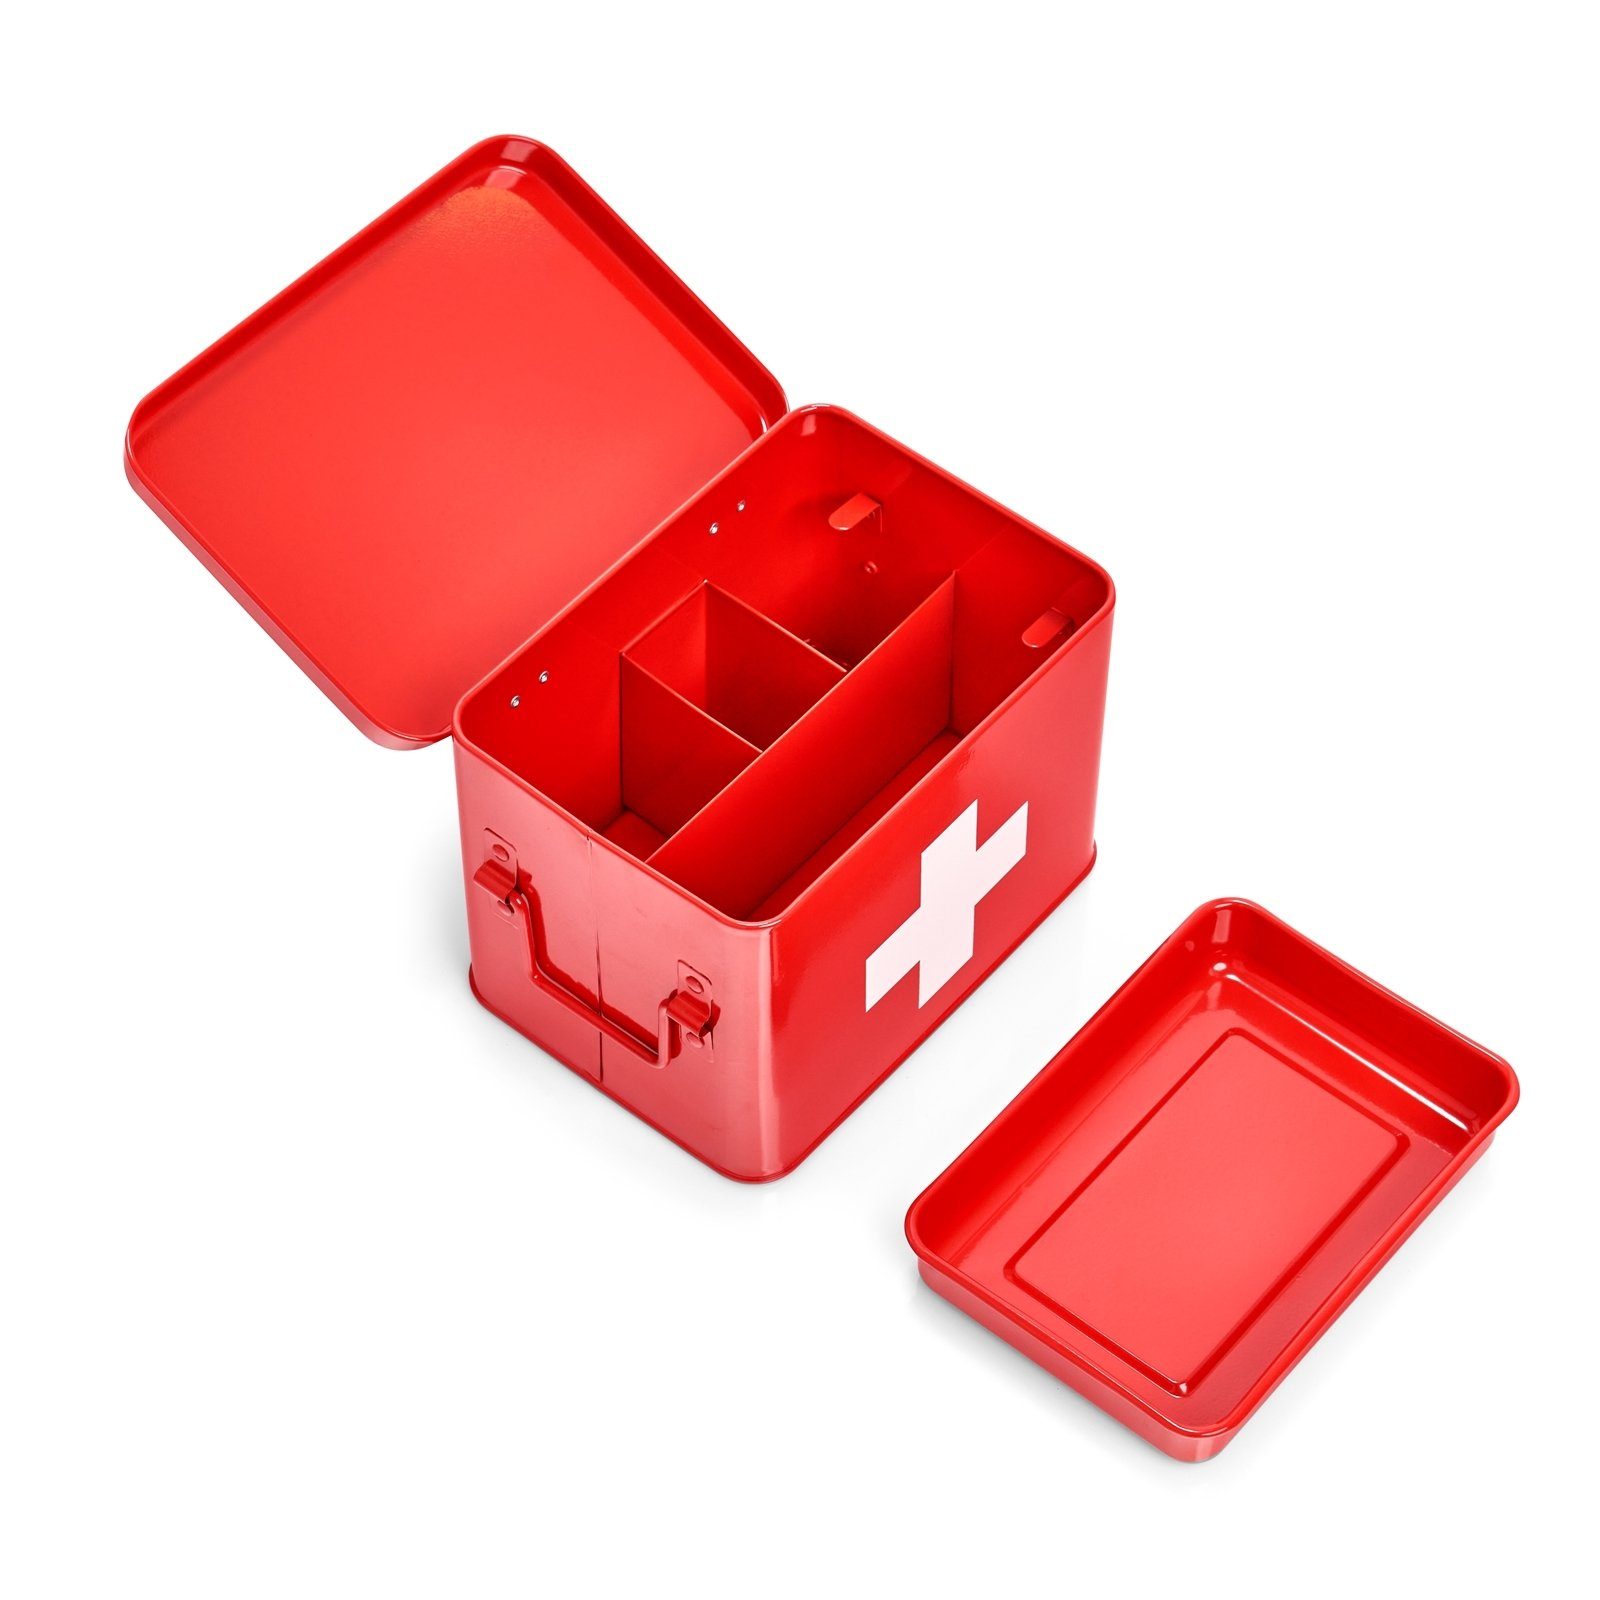 Verbandskasten Metall Present Rot Zeller Medizinbox Medizinschrank